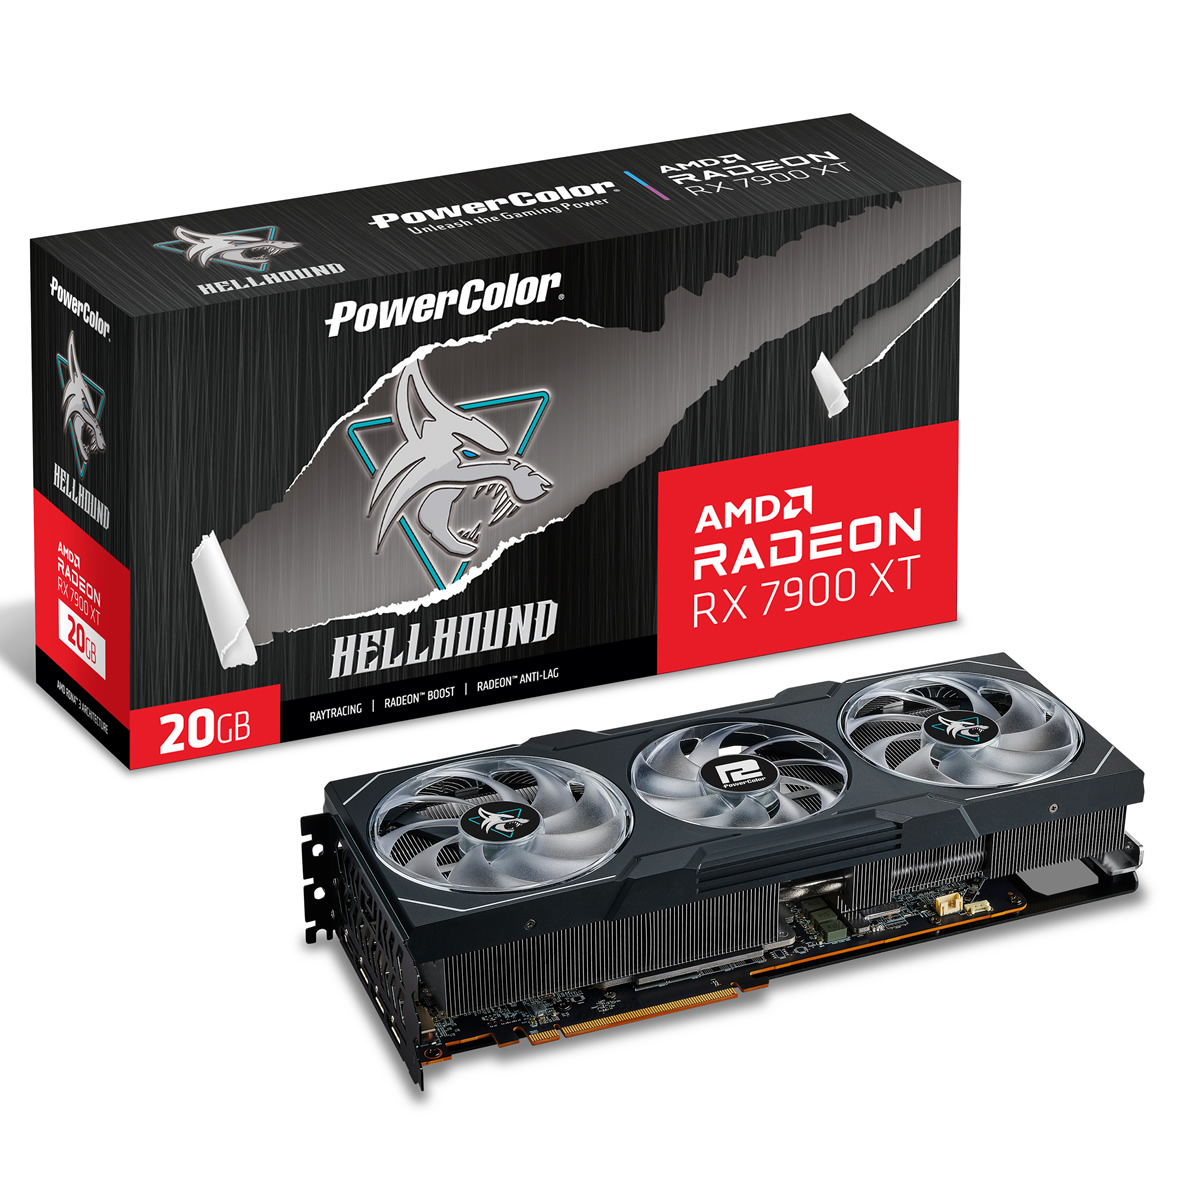 Powercolor Radeon RX 7900 XT HellHound 20GB GDDR6 PCI-Express Graphics Card